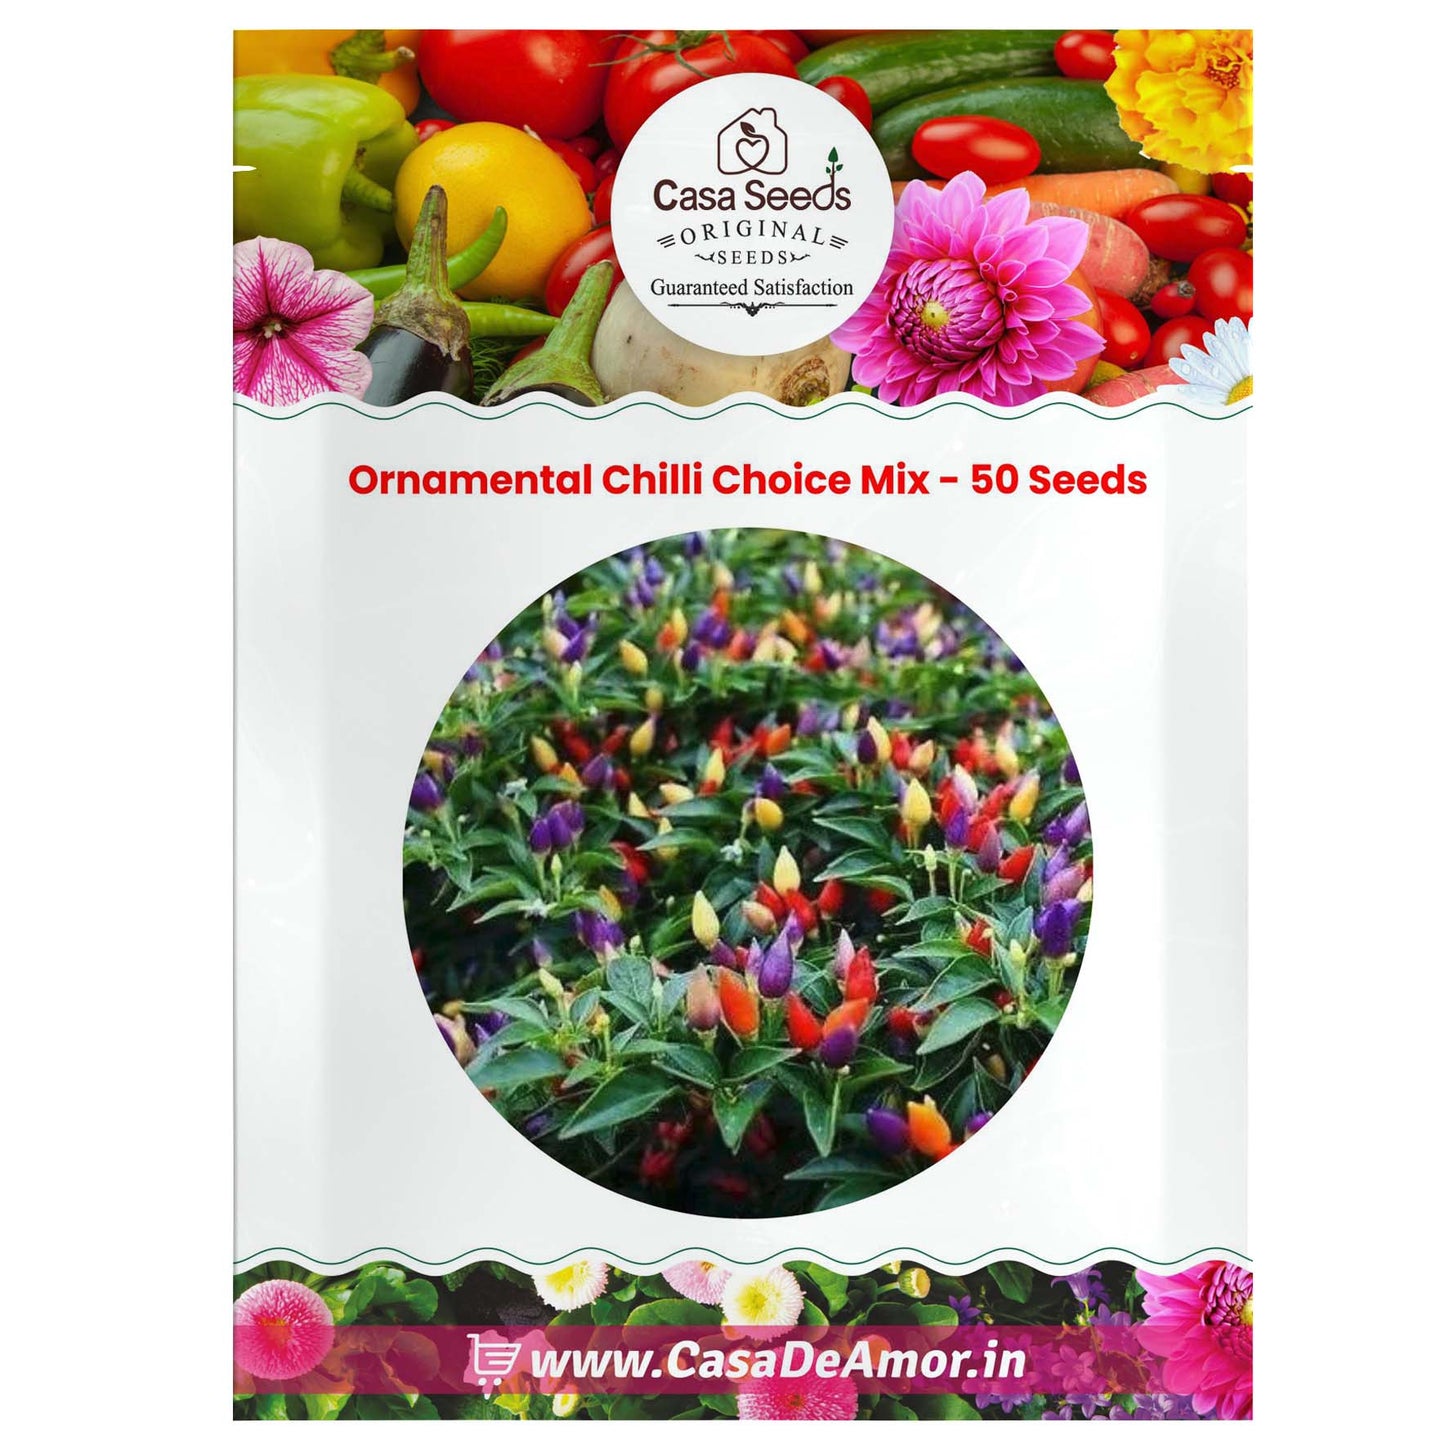 Ornamental Chilli Choice Mix - 50 Seeds